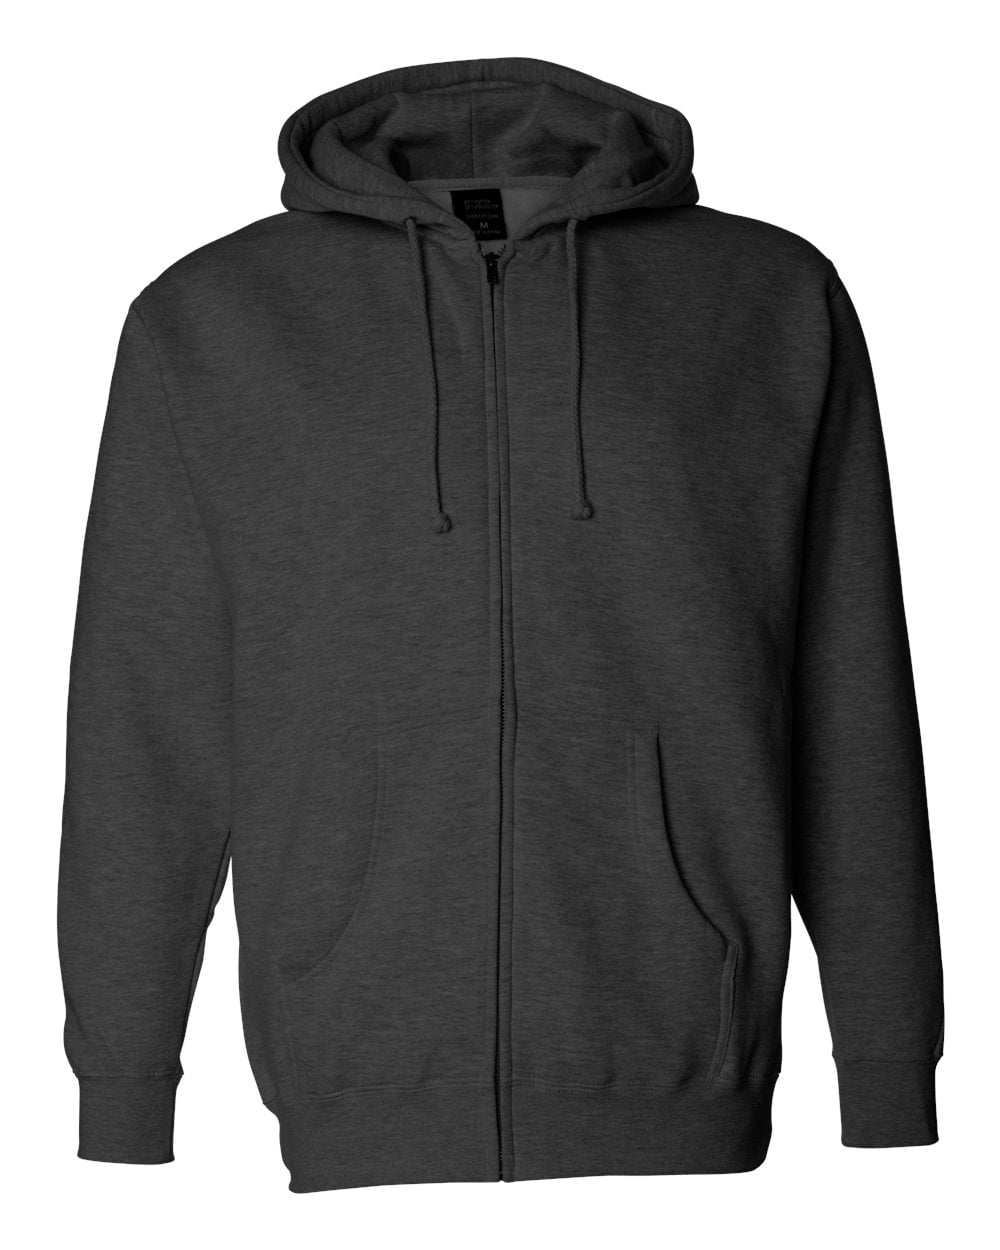 Independent Trading Co. - ITC IND4000Z Men's Full-Zip Hooded Sweatshirt ...